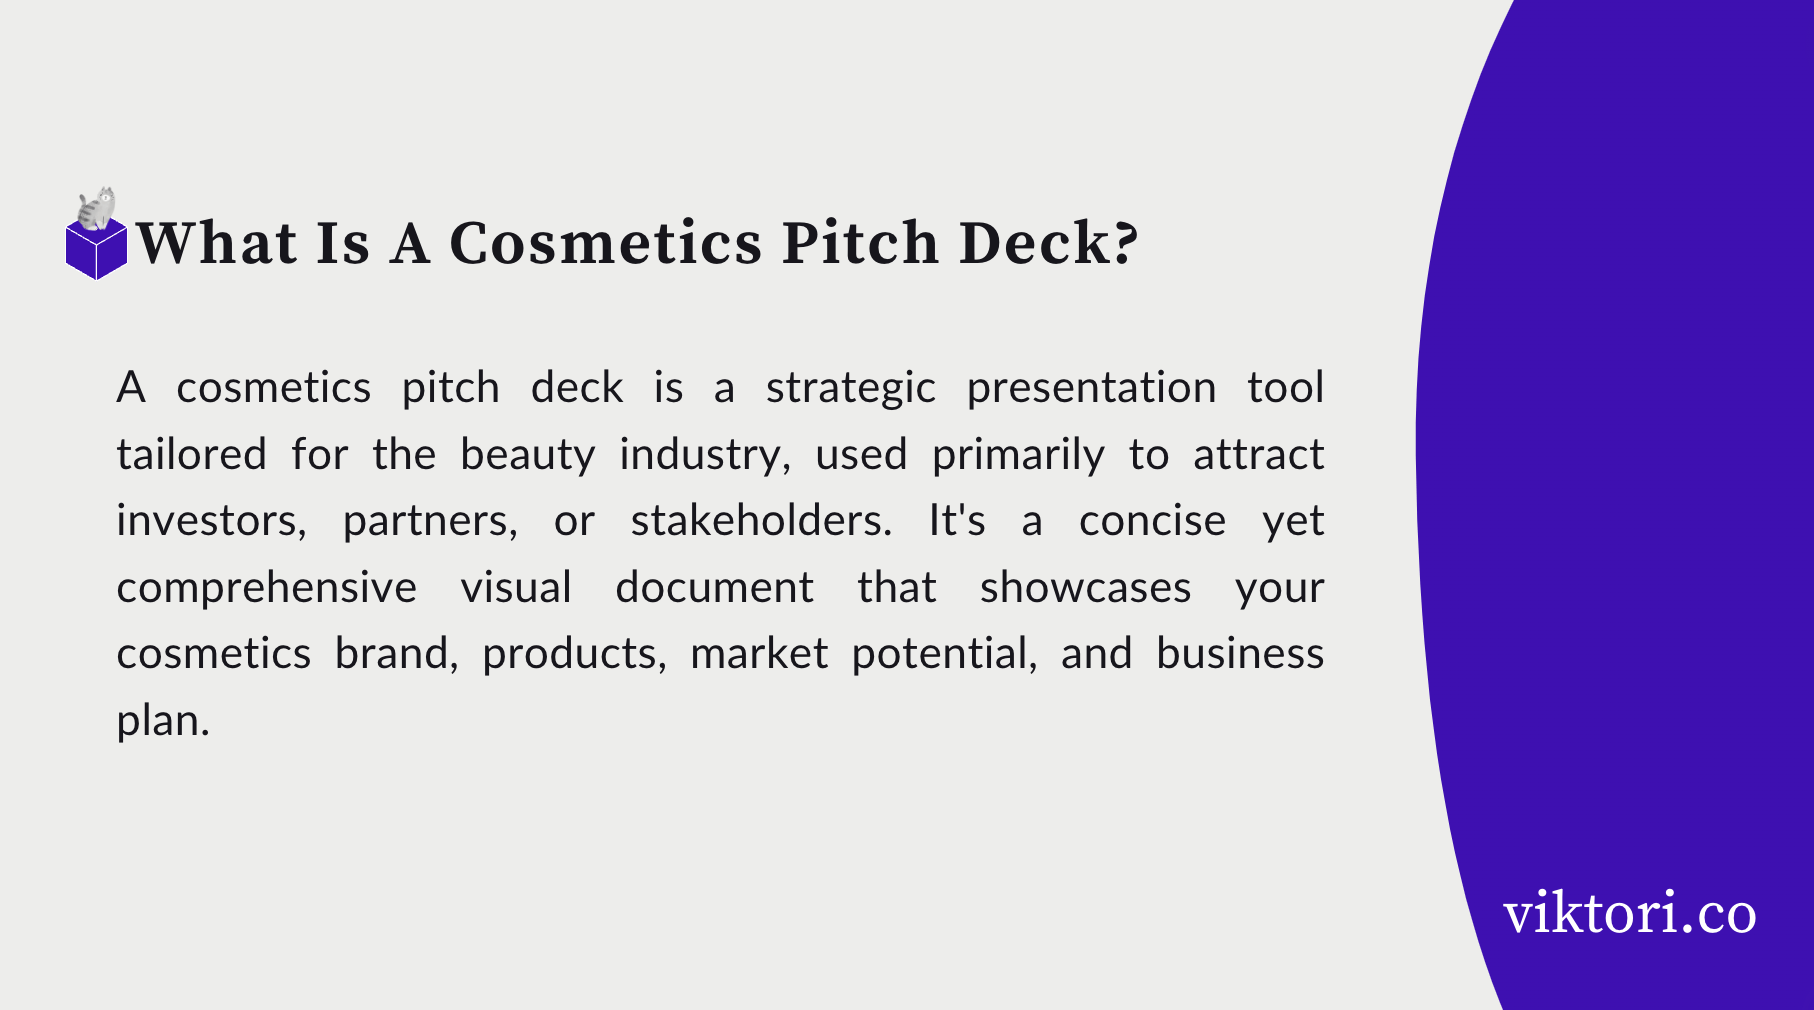 cosmetics pitch deck definition